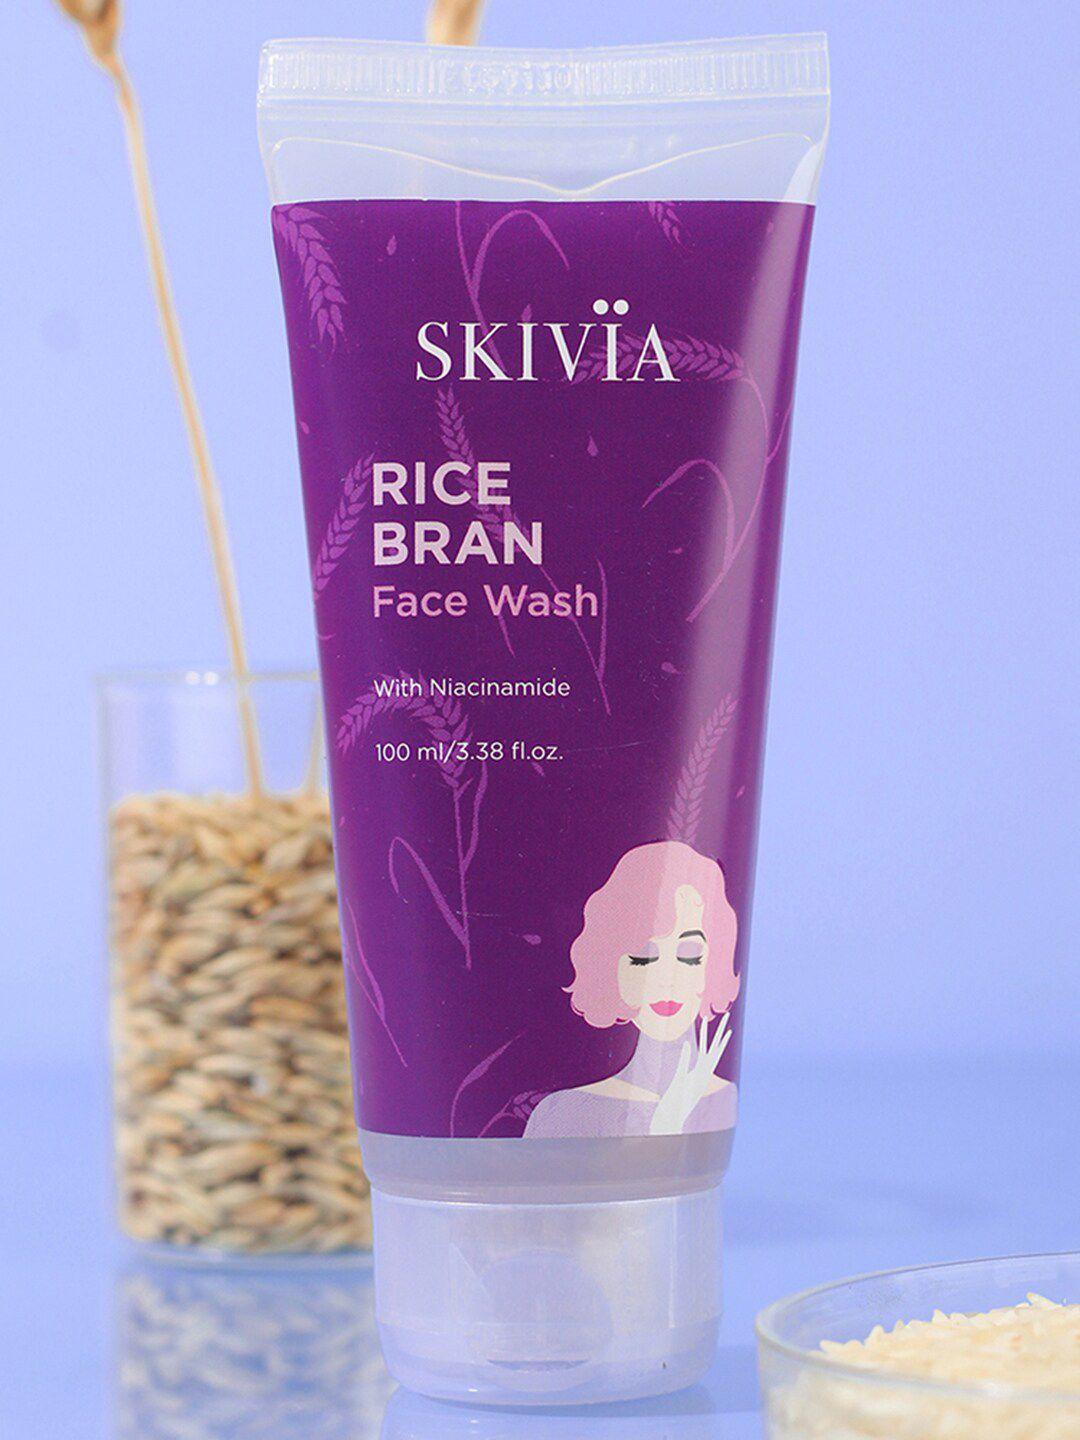 skivia rice bran mini face wash with niacinamide to clear away dirt & enhance glow - 100ml